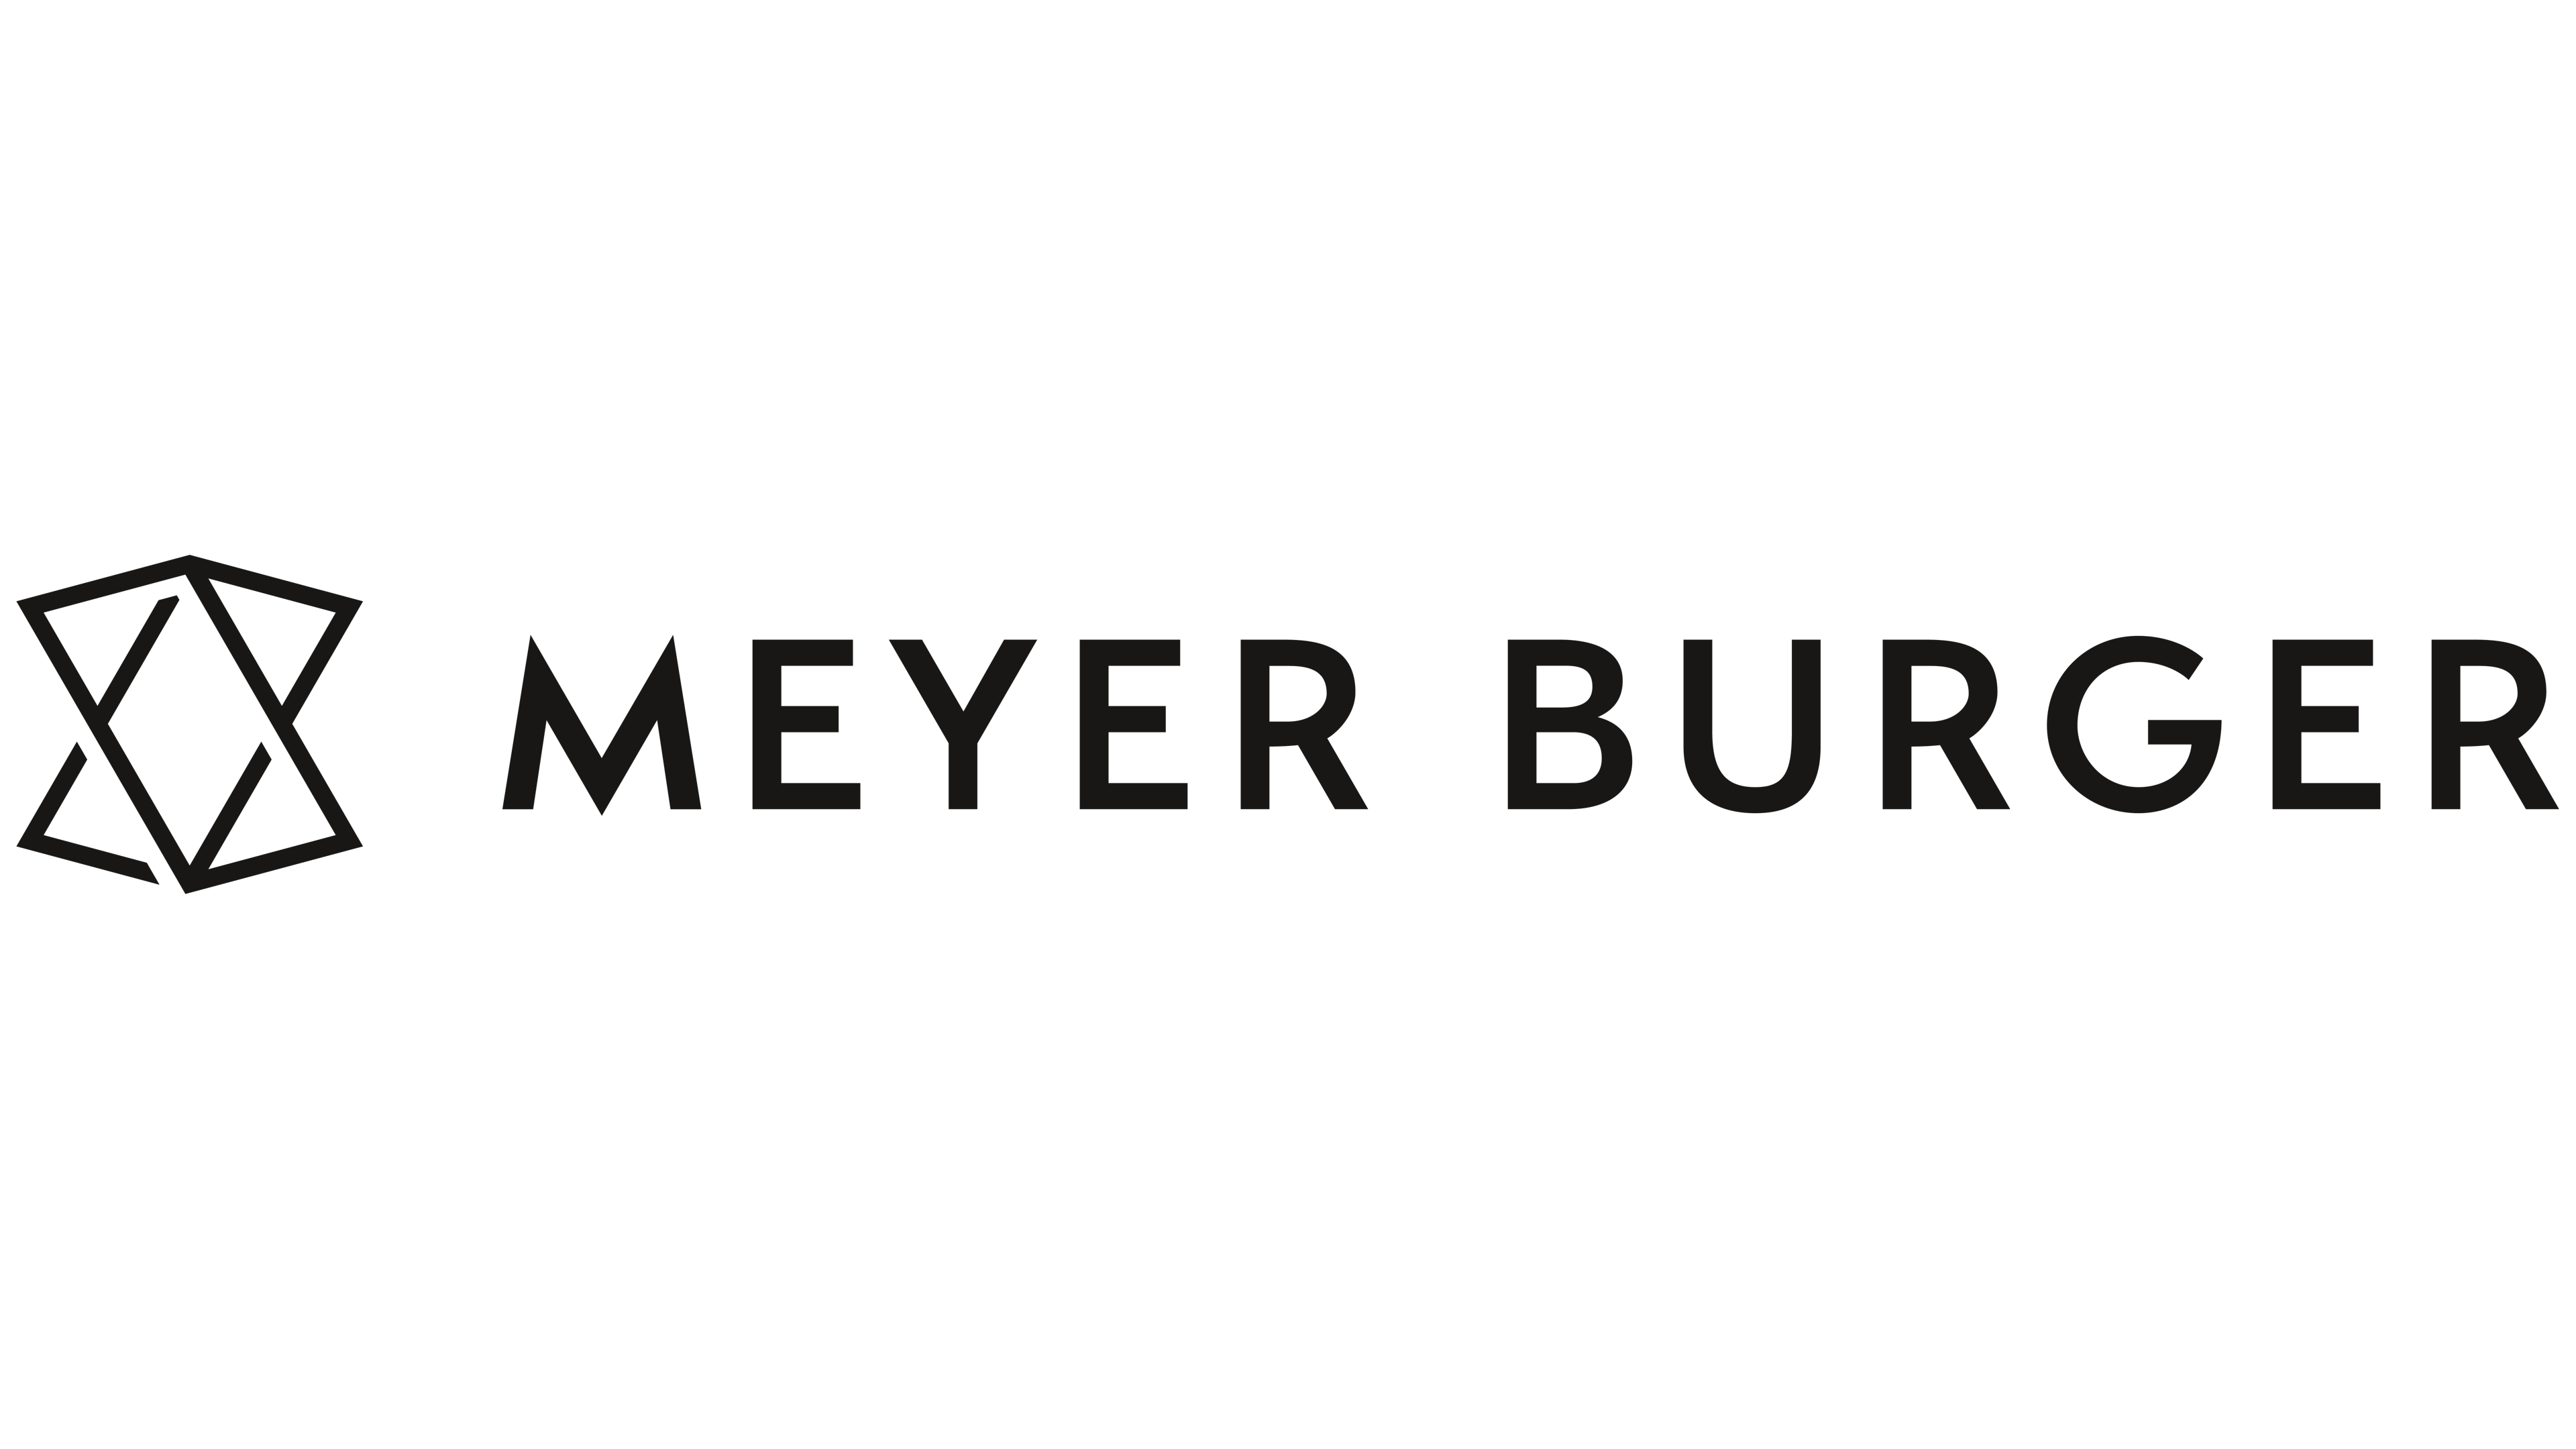 Logo Meyer Burger